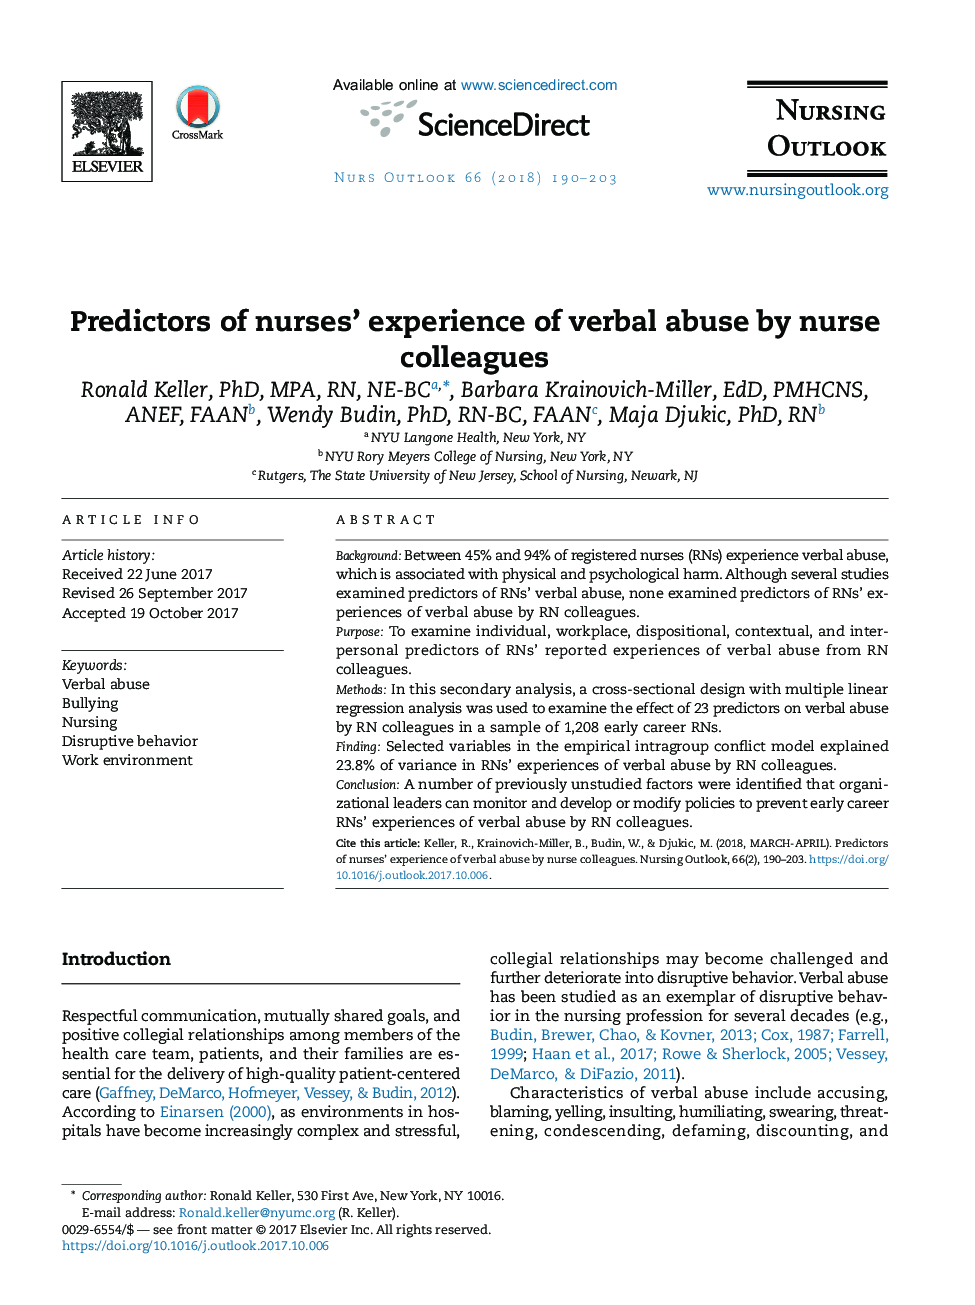 Predictors of nurses' experience of verbal abuse by nurse colleagues